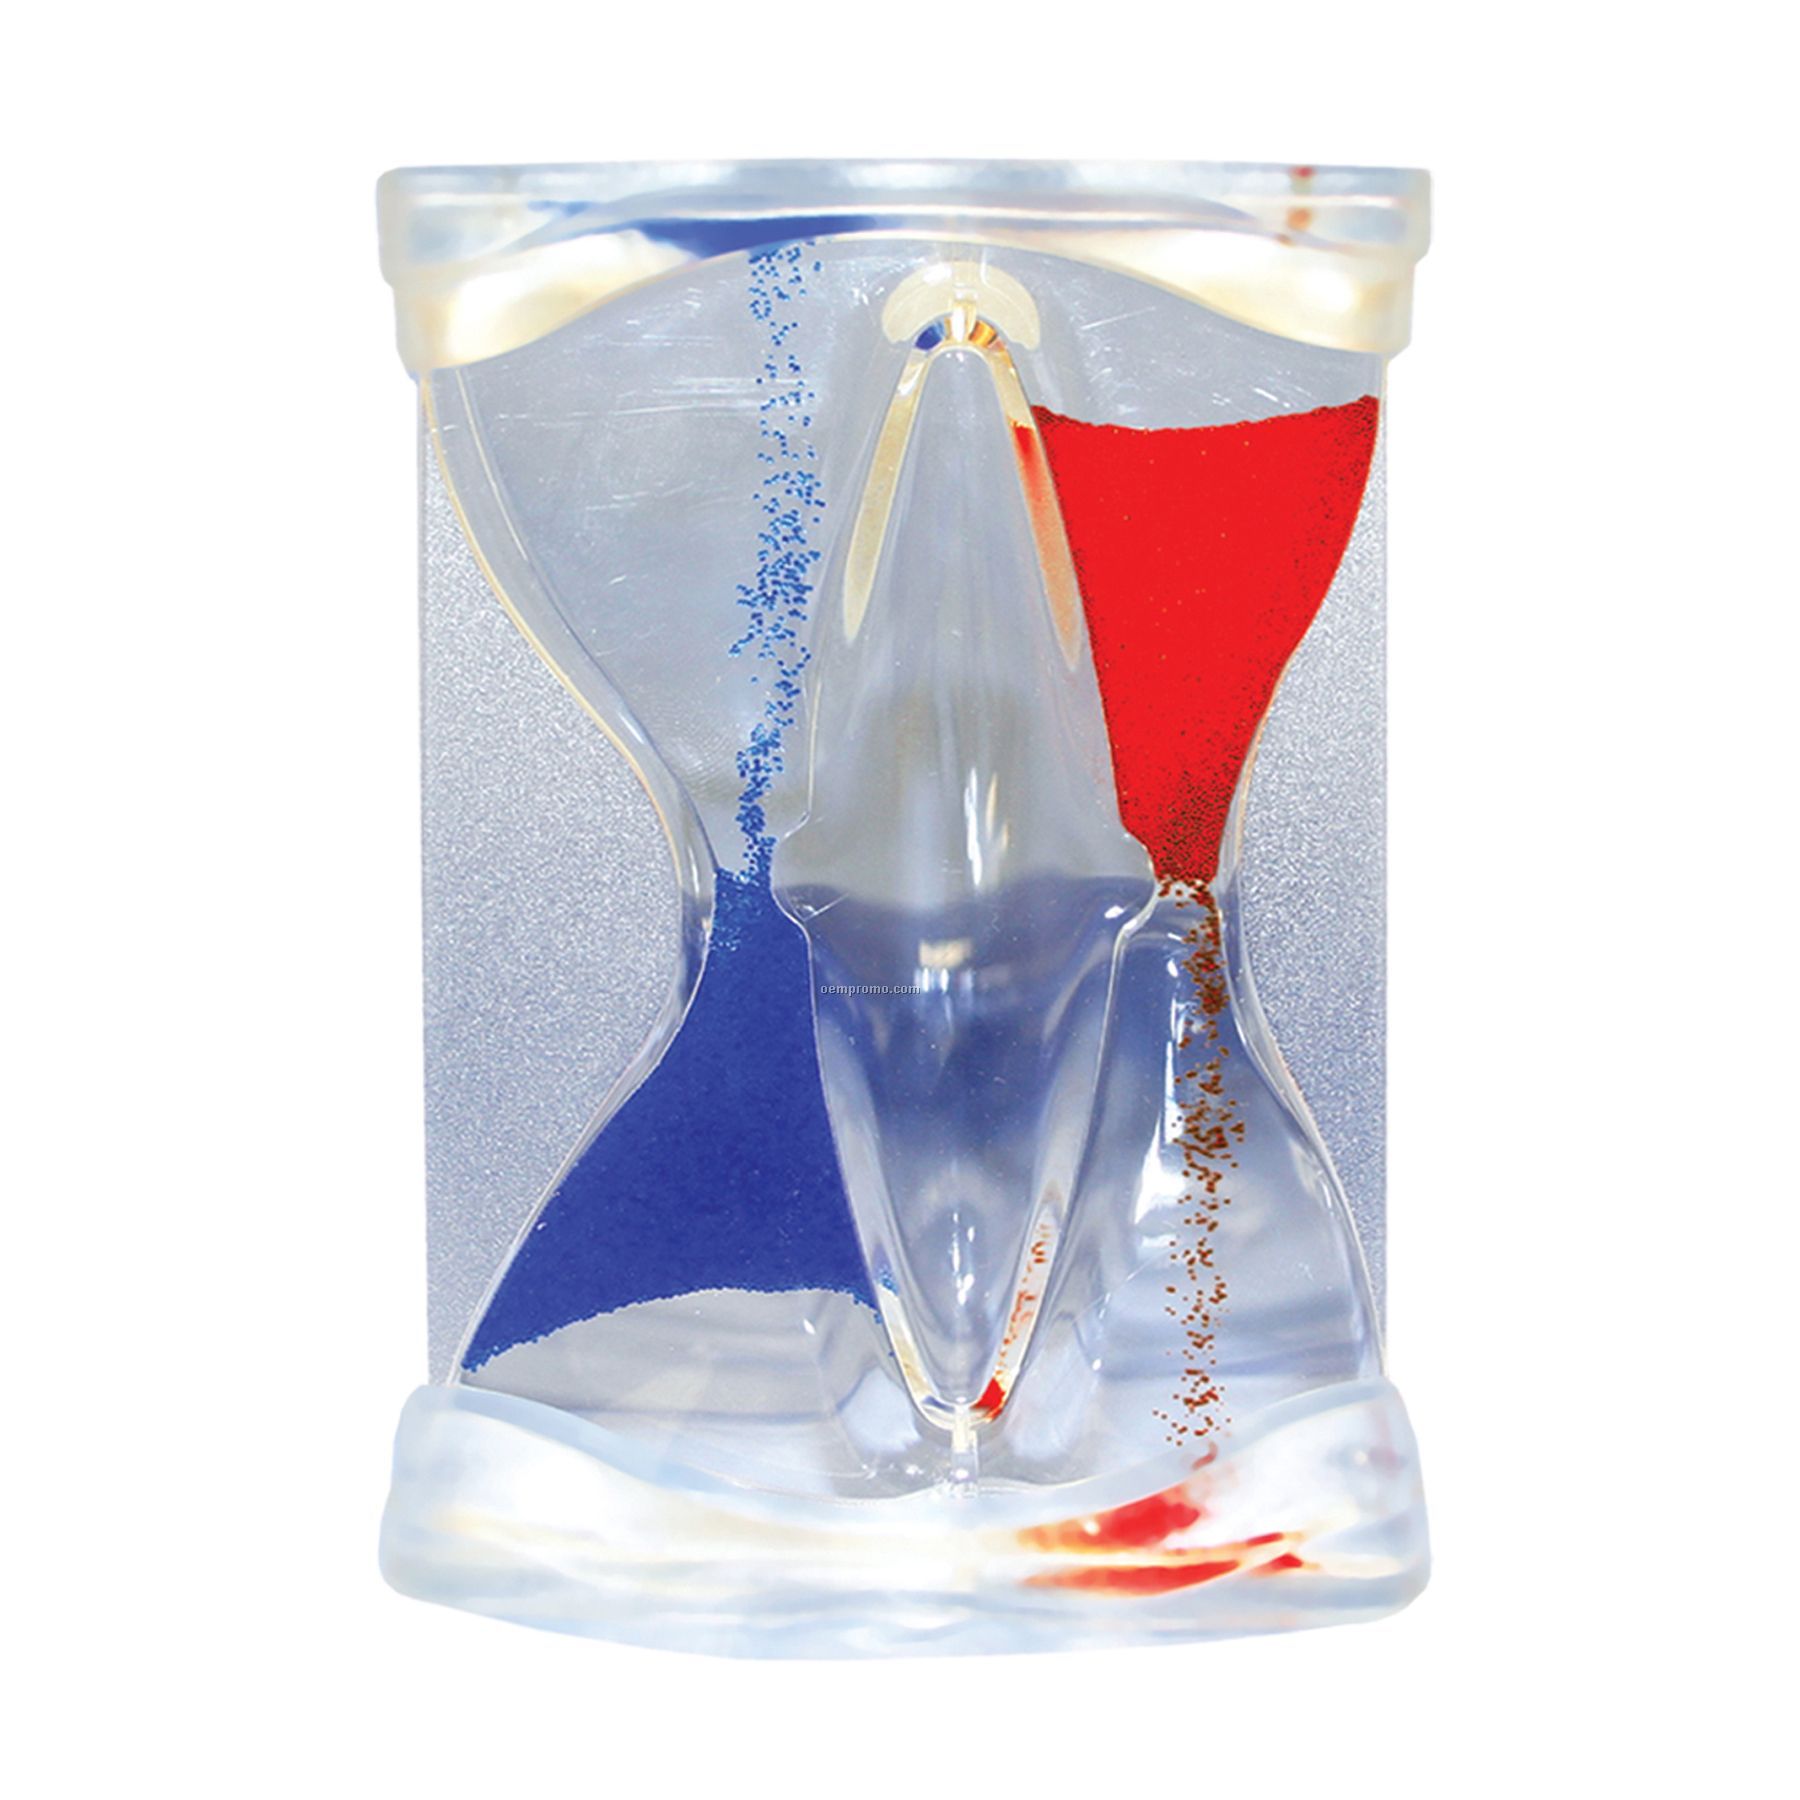 Inverse Flow Liquid Timer - Blue/Red